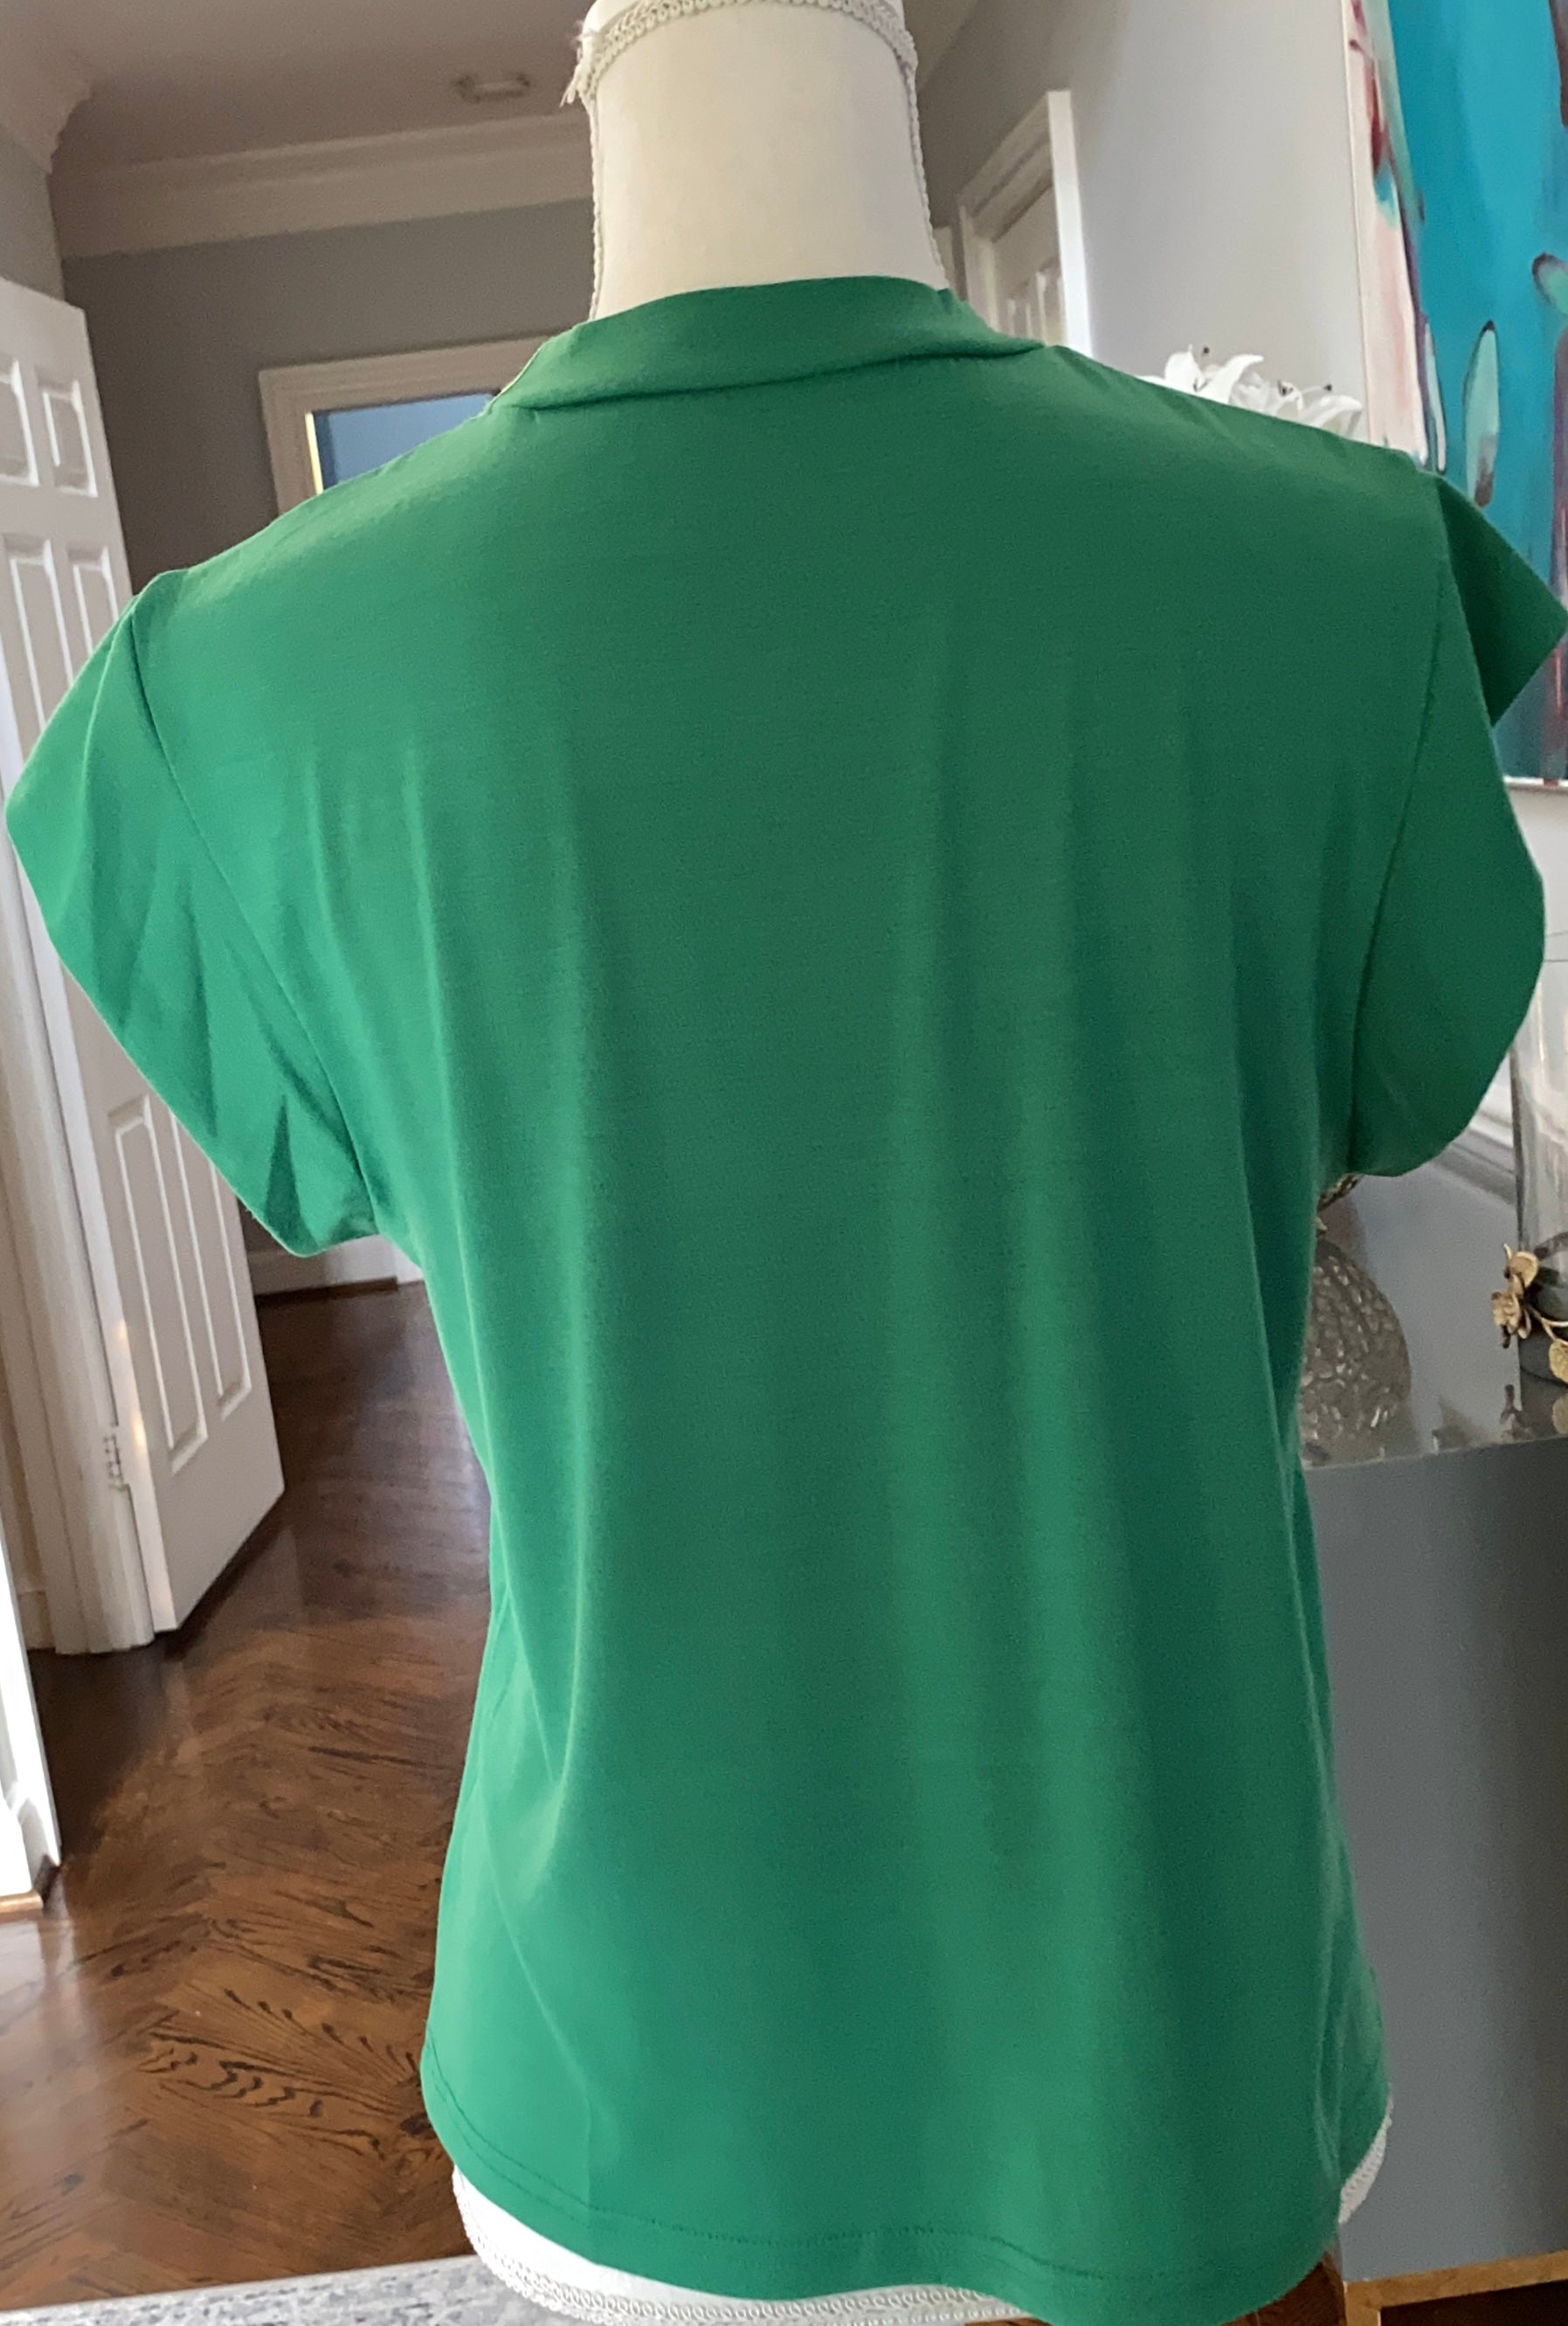 Green Mock neck shirt with Heart Design حب